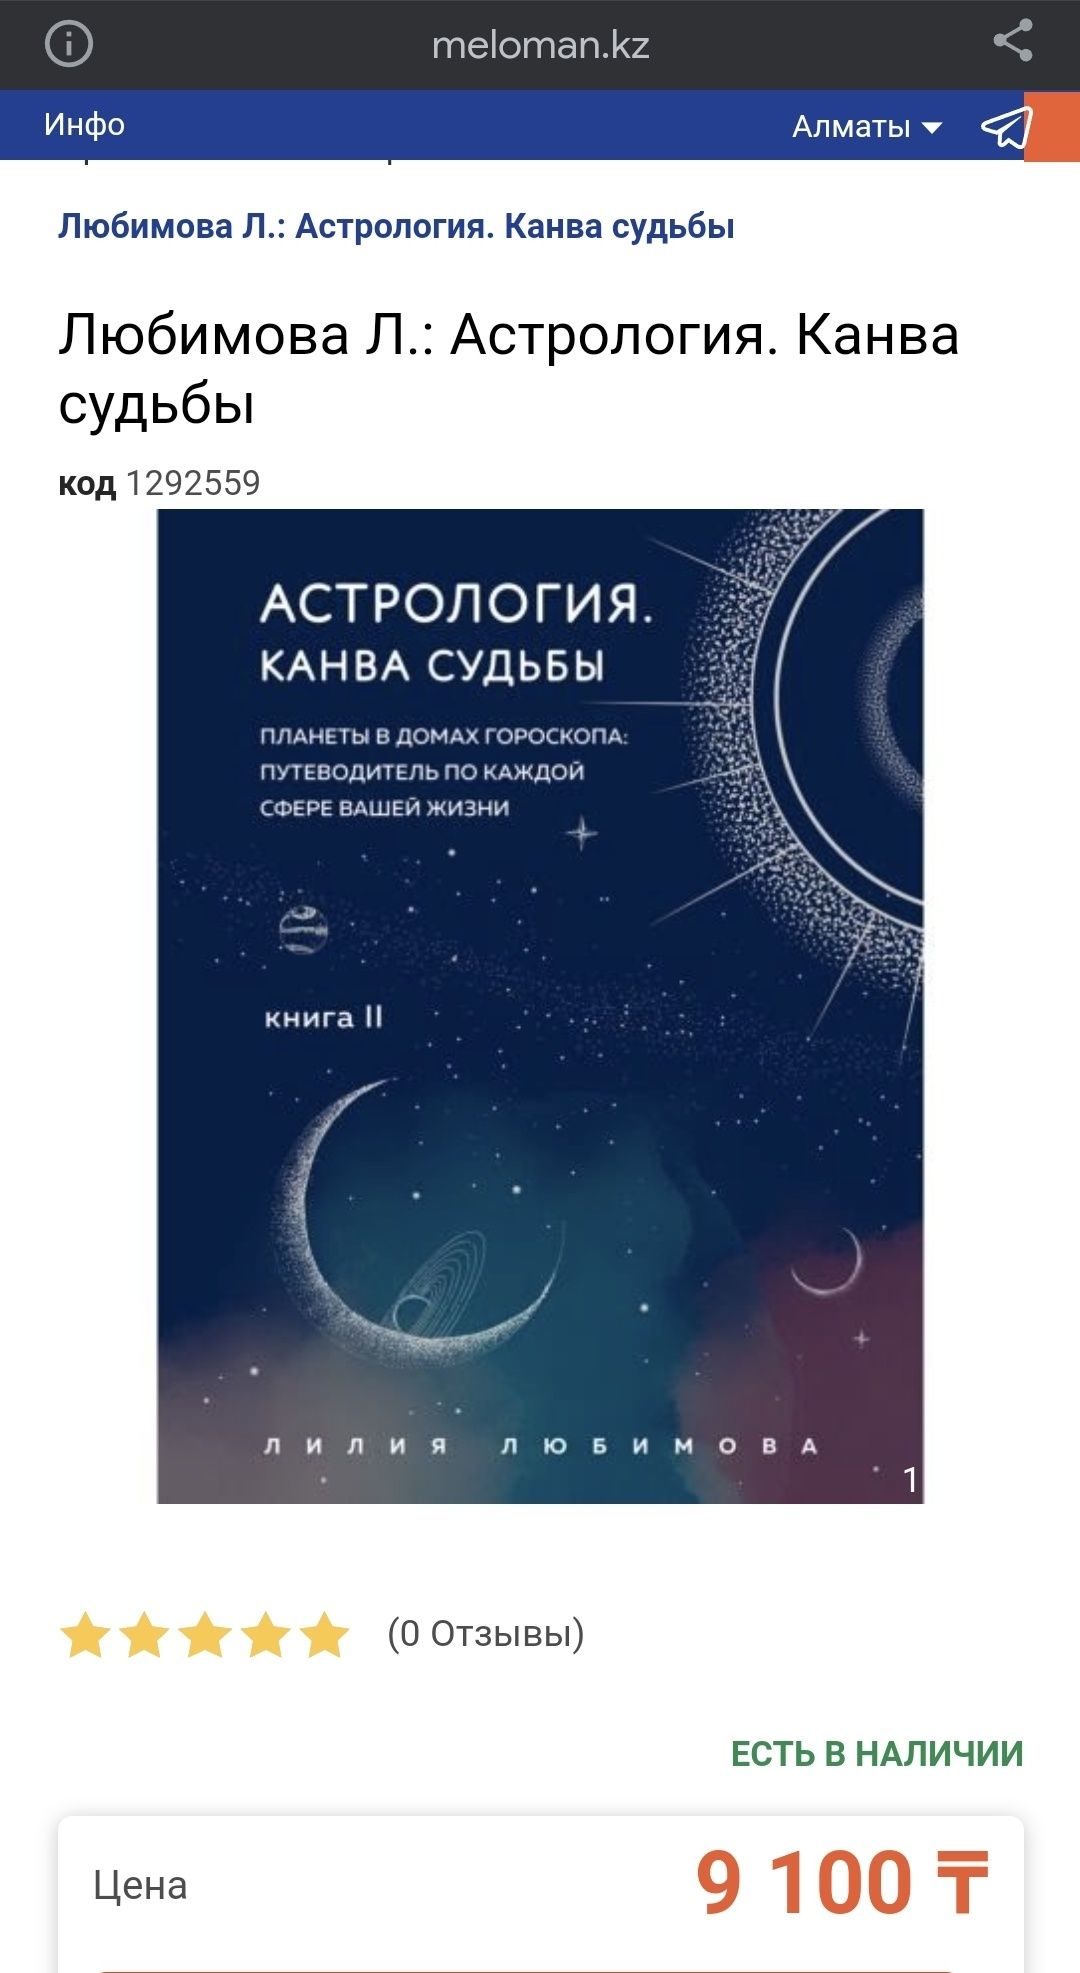 Астрология. Канва судьбы, книга ll. Лилия Любимова